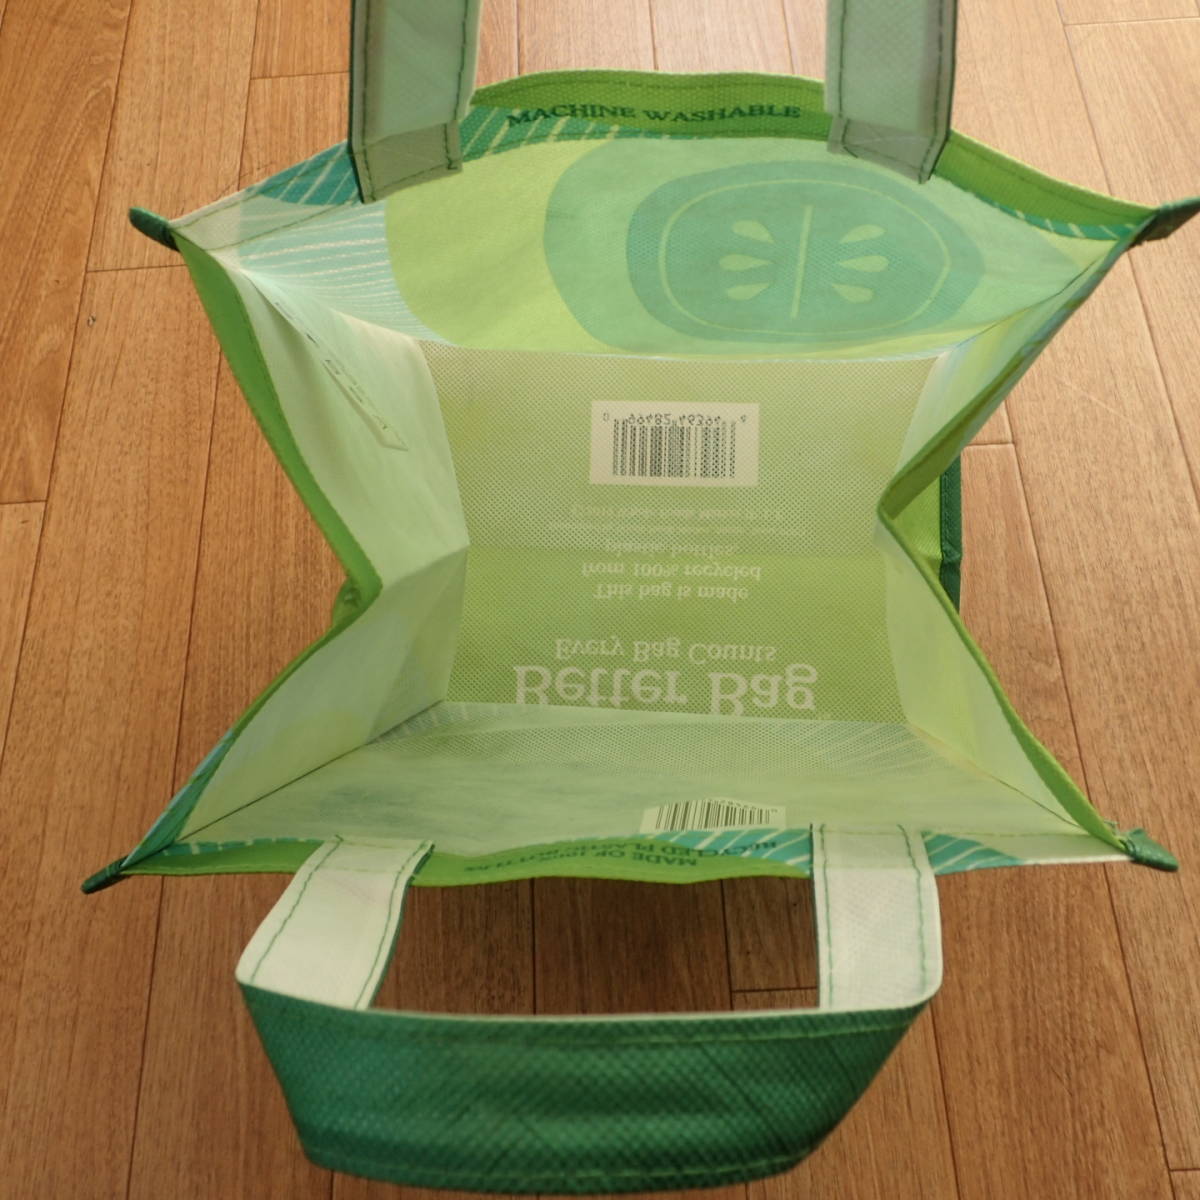 @@ unused hole f-z heat insulation bag keep cool bag eko-bag 2 point set WHOLE FOODS MARKET tote bag 